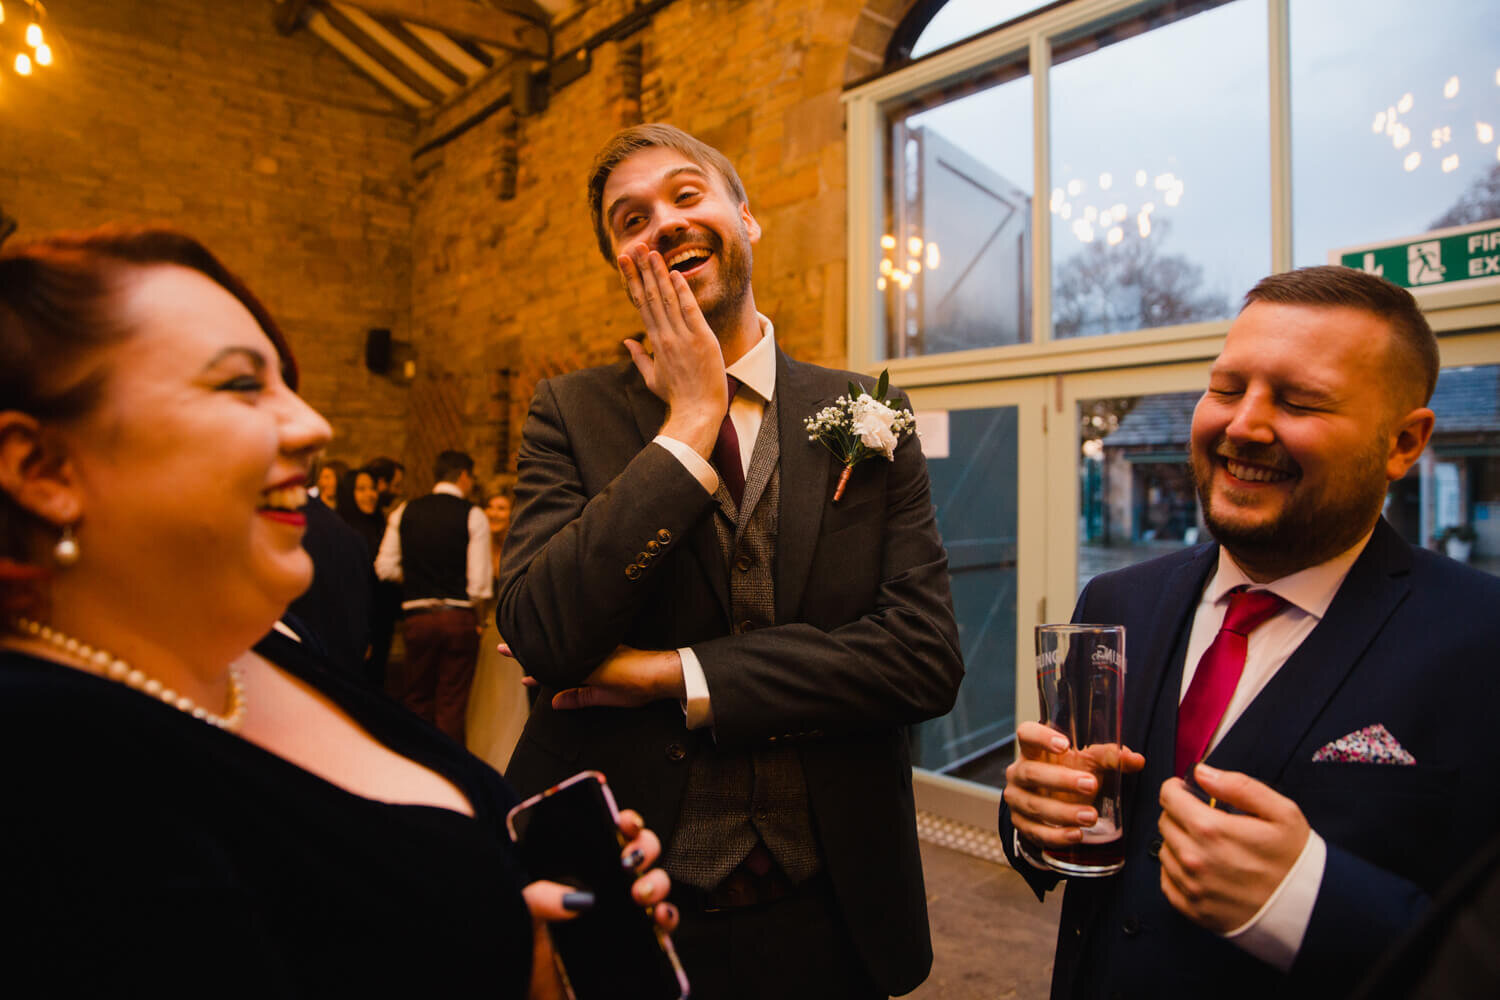 groom shares a joke with friends